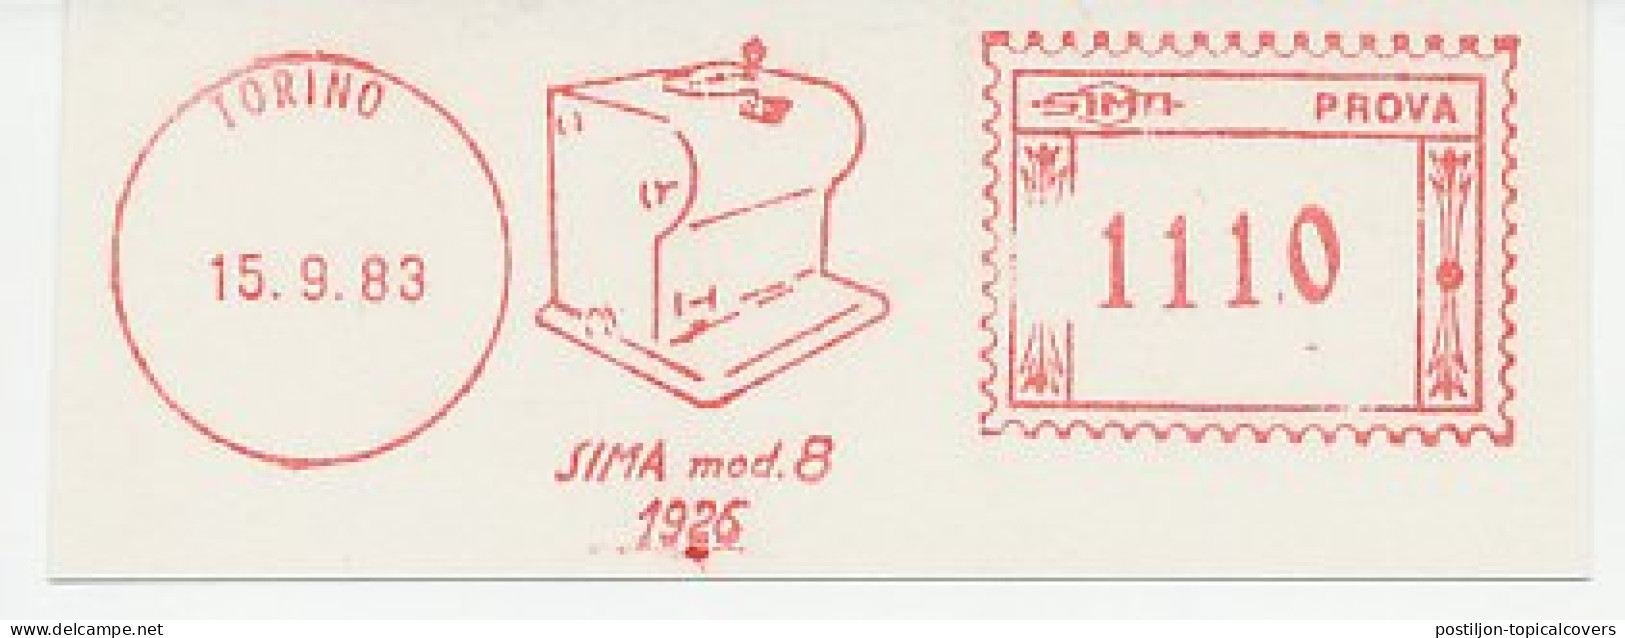 Proof Meter Cut Italy 1983 Sima - Mod. 8 1926 - Vignette [ATM]